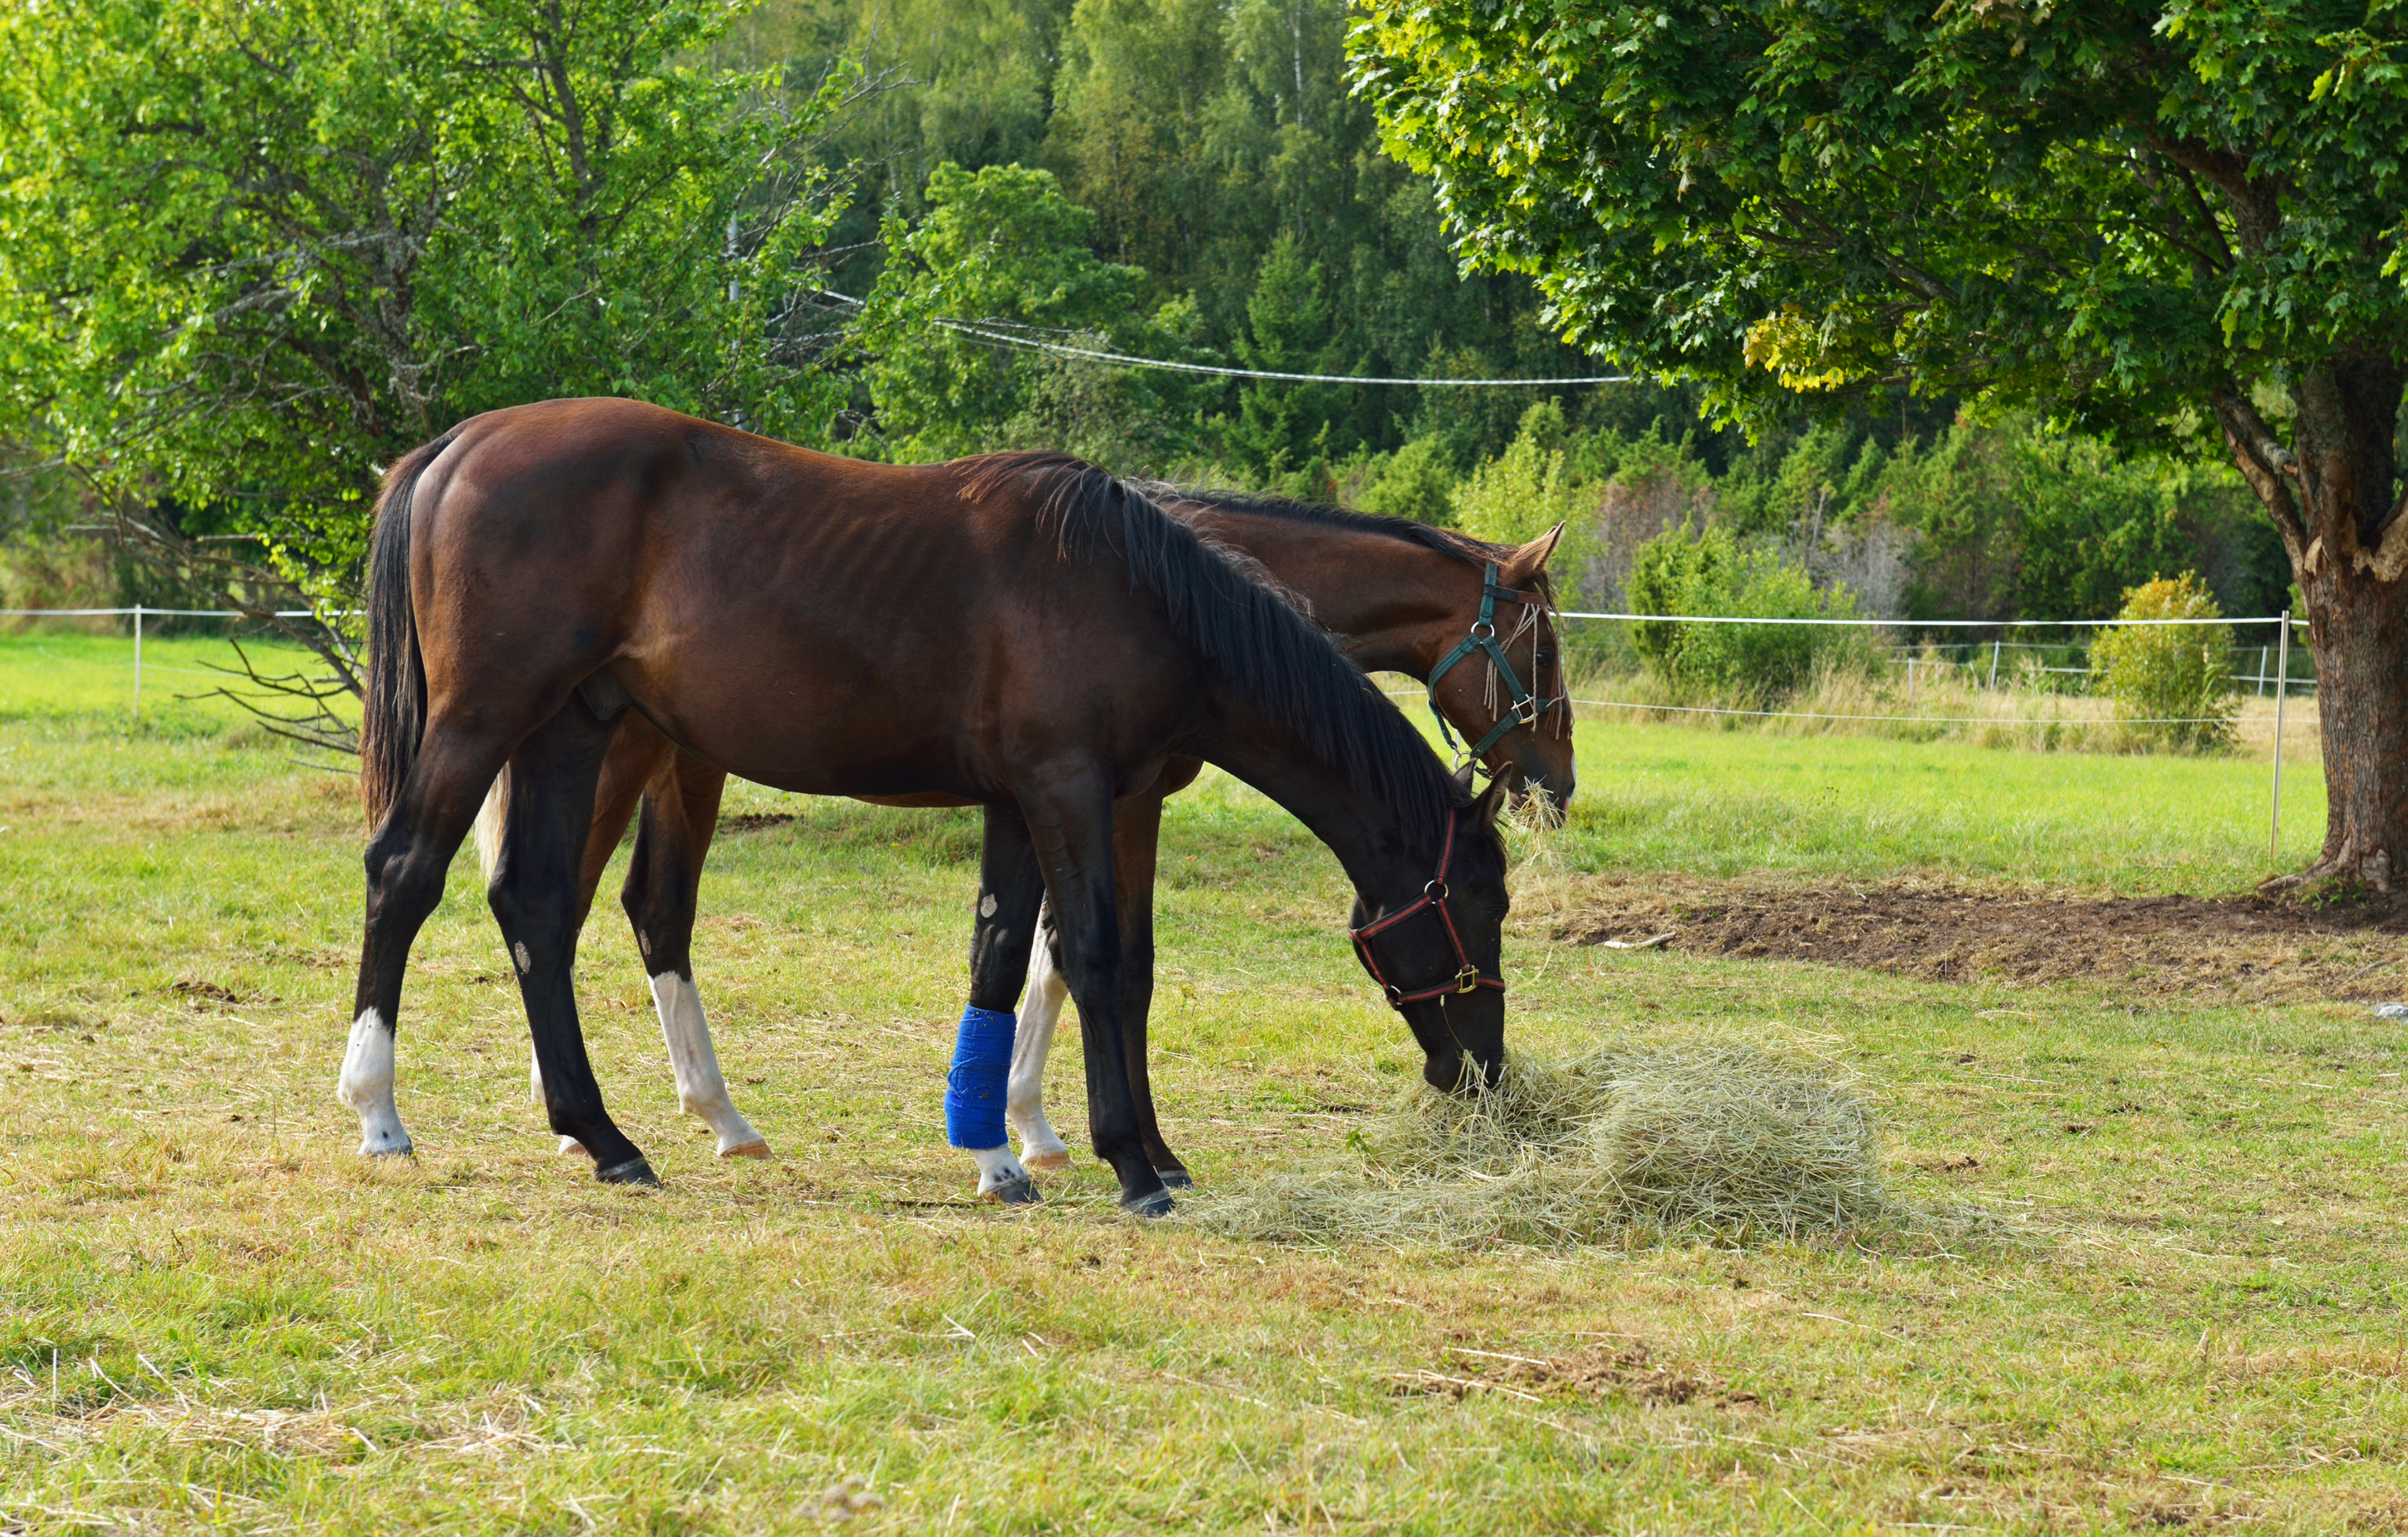 In pasture, horses eating hay